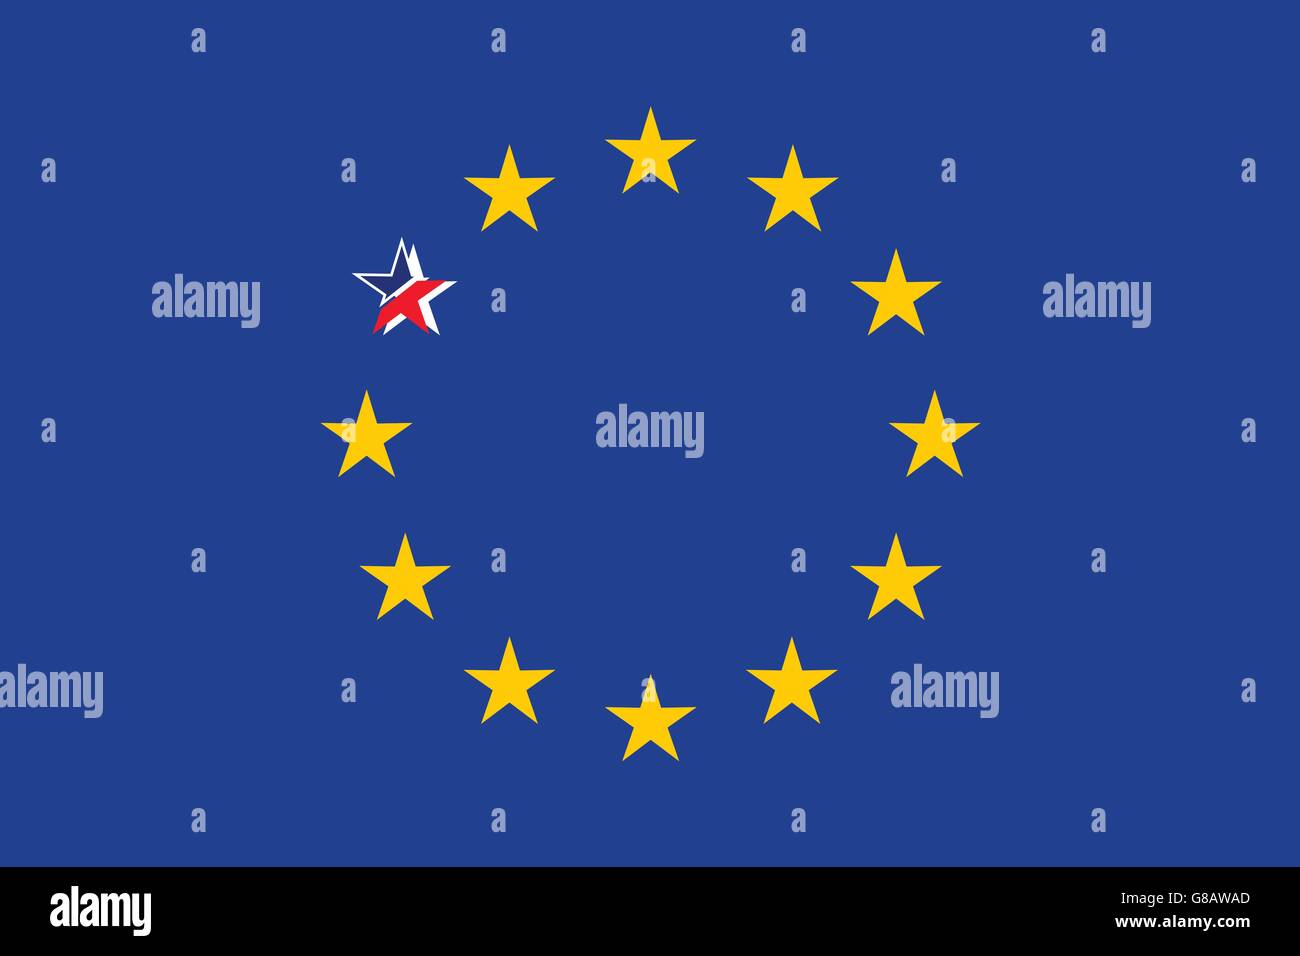 European Flag With Broken British Star Vector Illustration Stock Vector